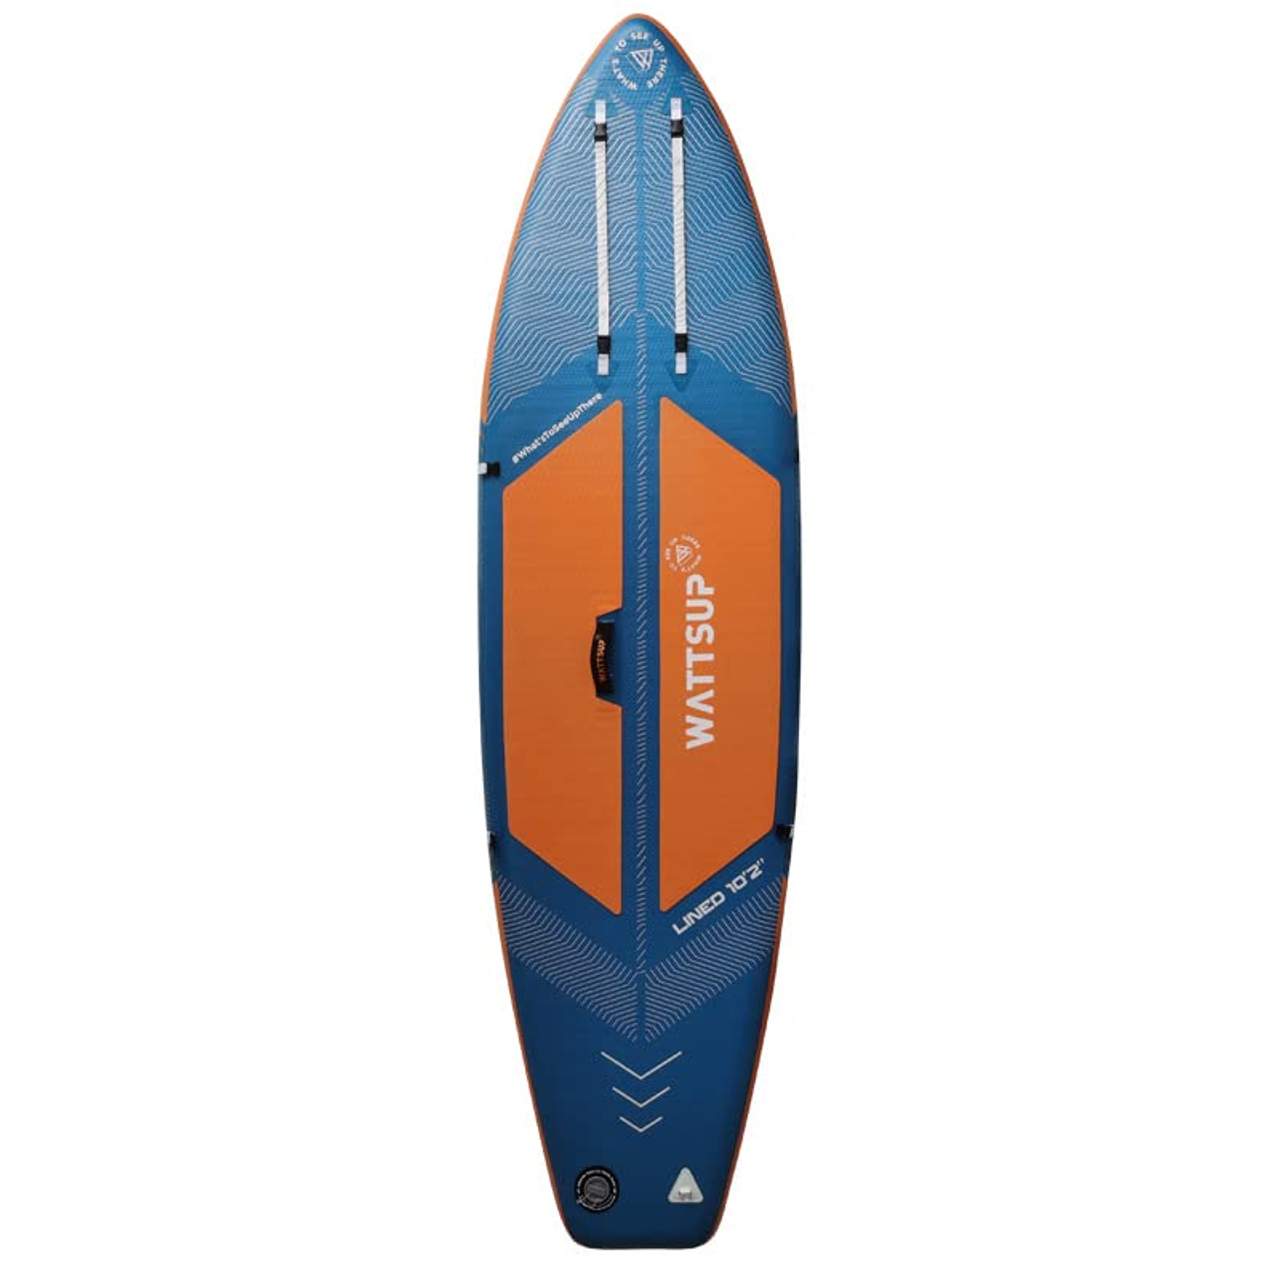 WATTSUP Lined 10'2 SUP aufblasbar Stand Up Paddle Board 310cm